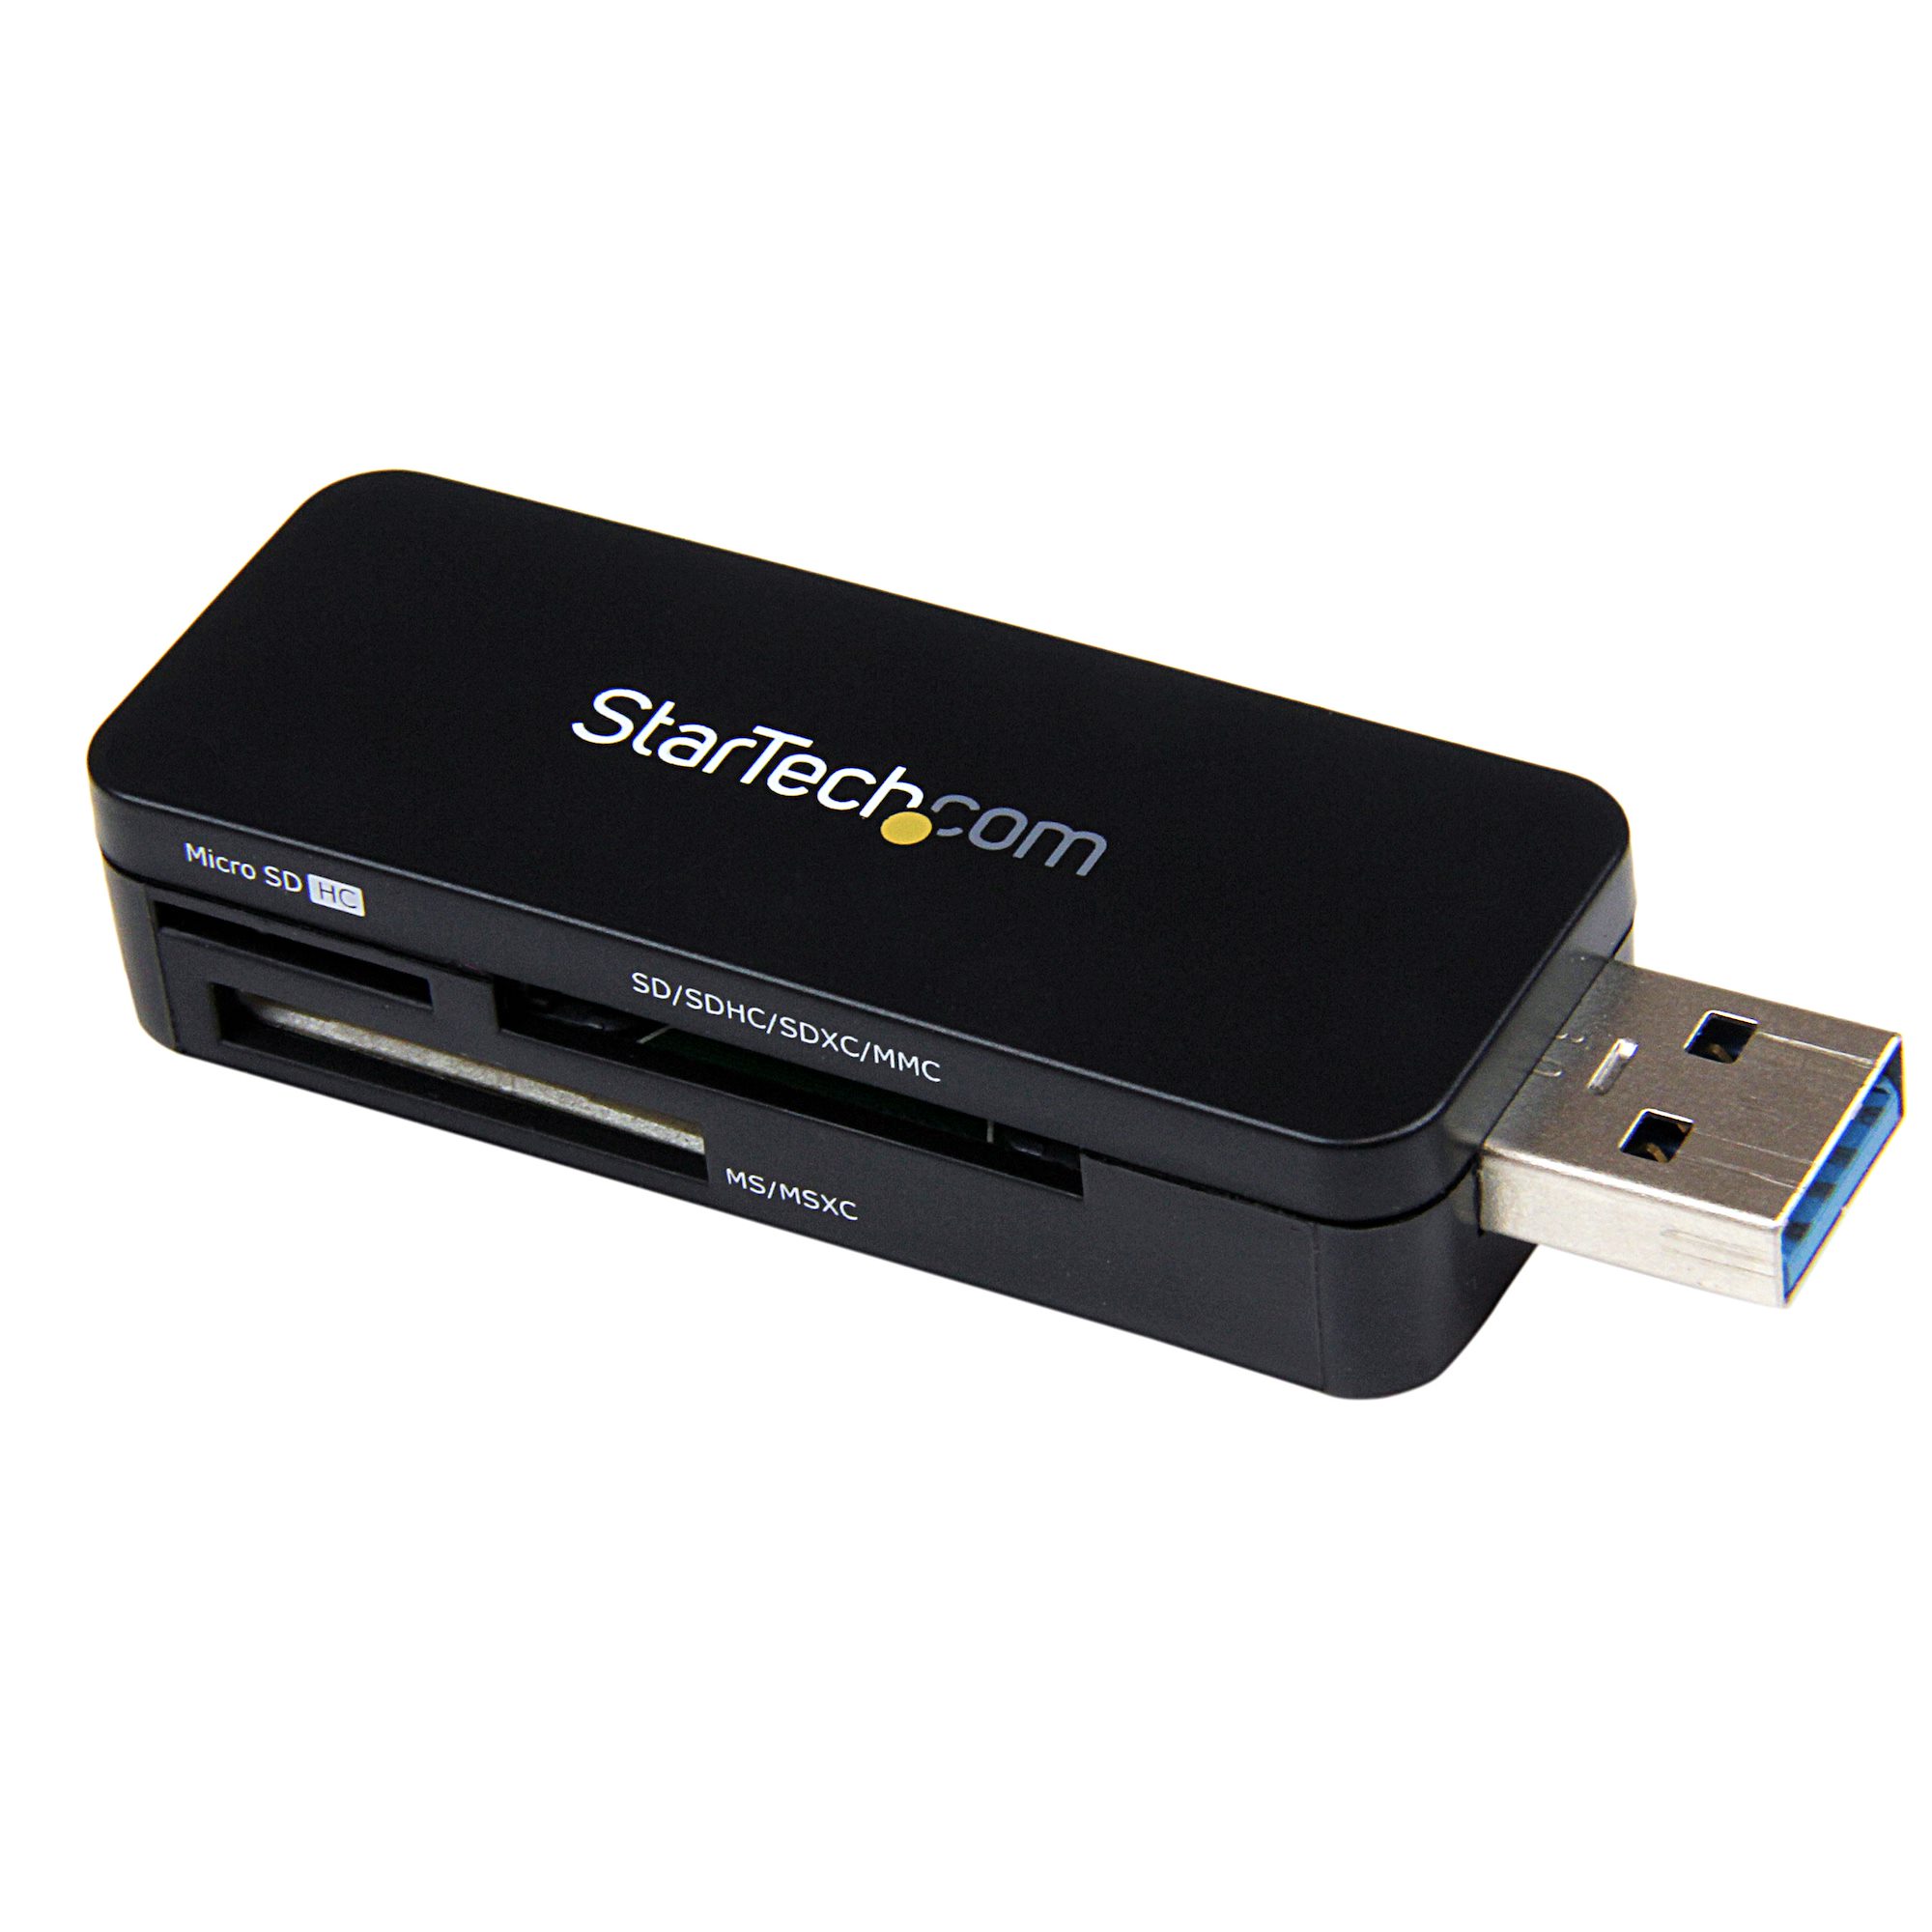 Forkert raid Indeholde USB 3.0 External Memory Card Reader - SD - USB Card Readers | StarTech.com